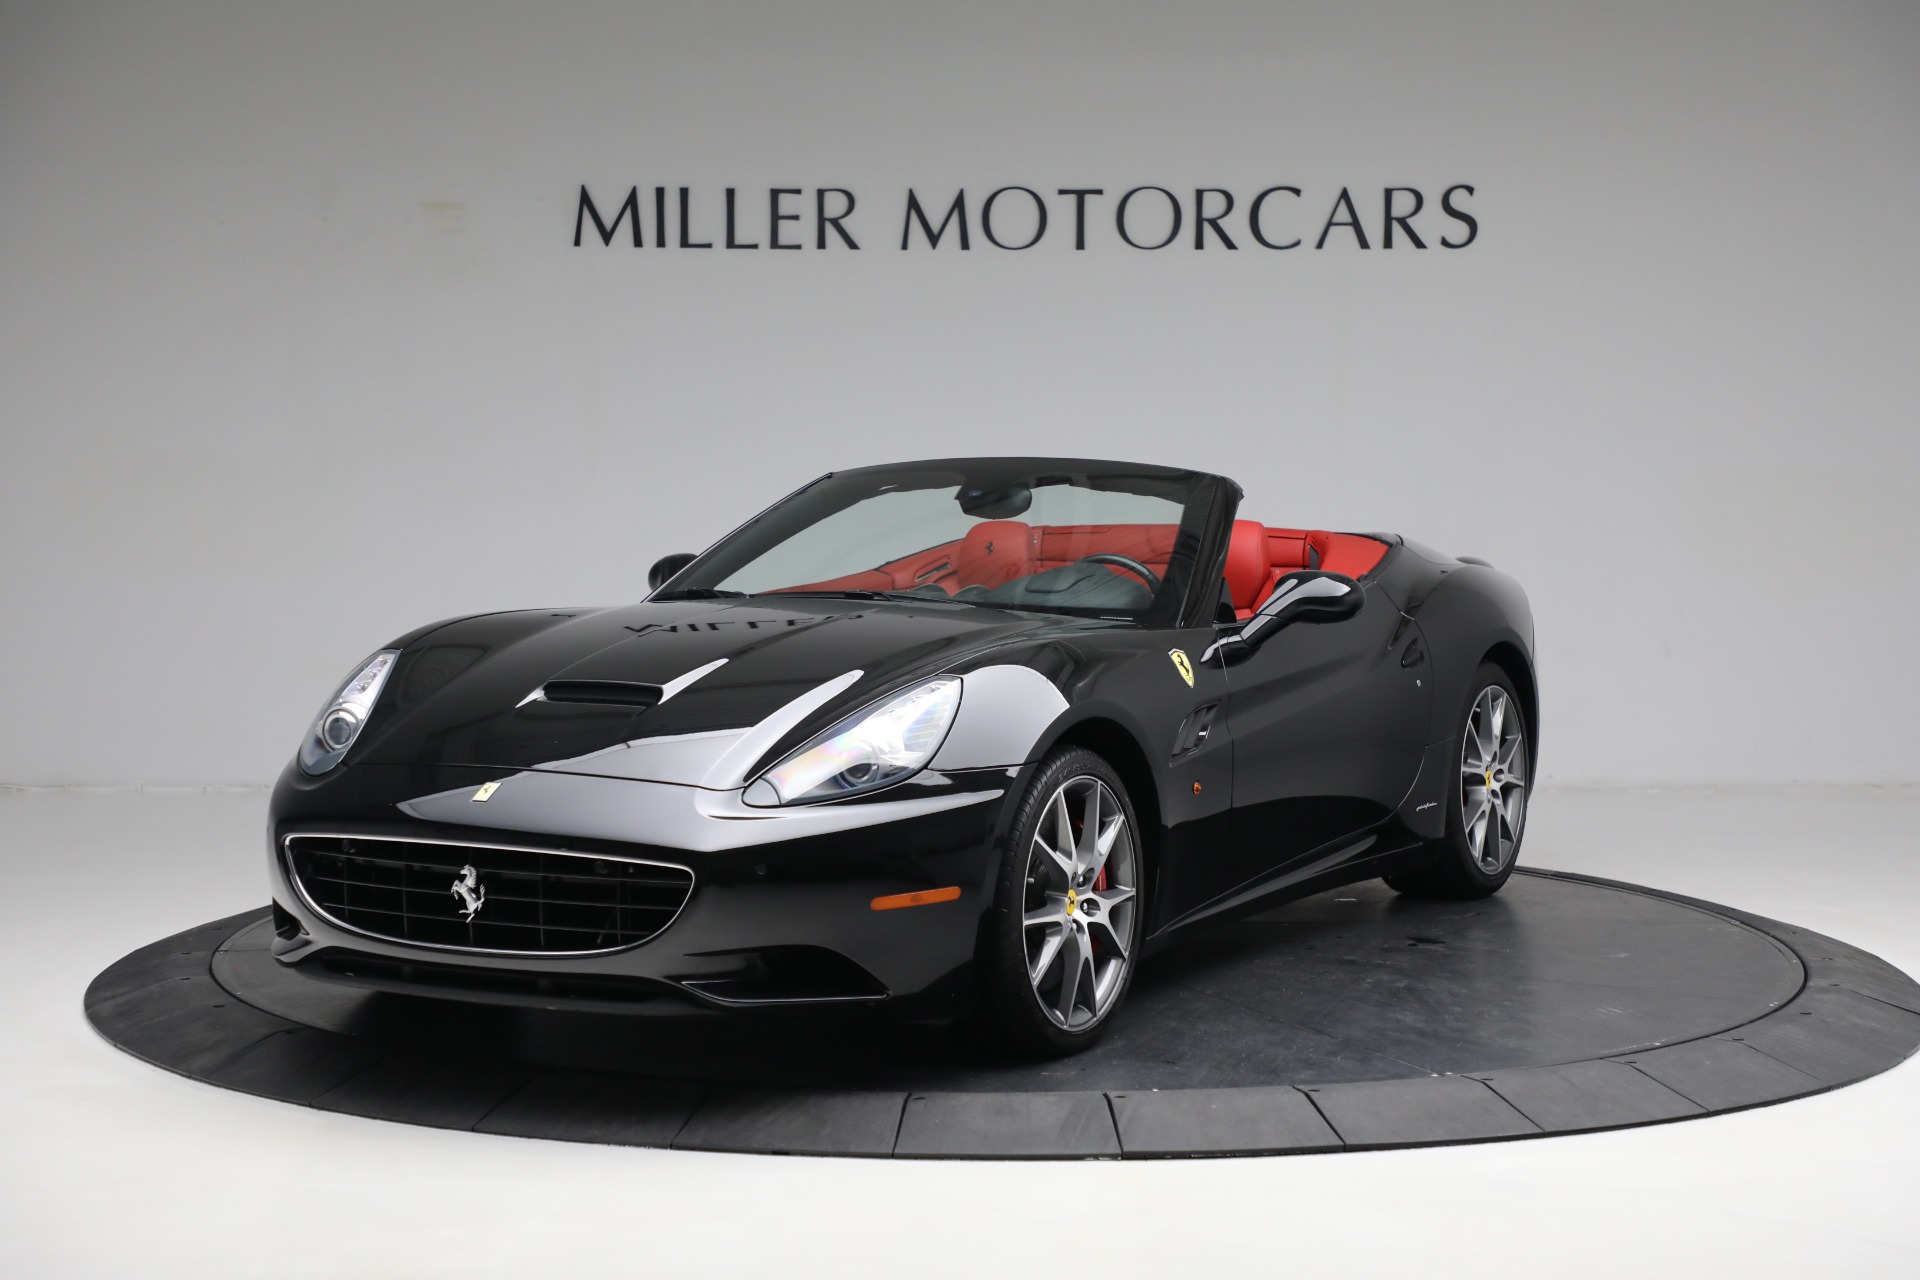 Used 2013 Ferrari California 30 for sale Sold at Maserati of Greenwich in Greenwich CT 06830 1